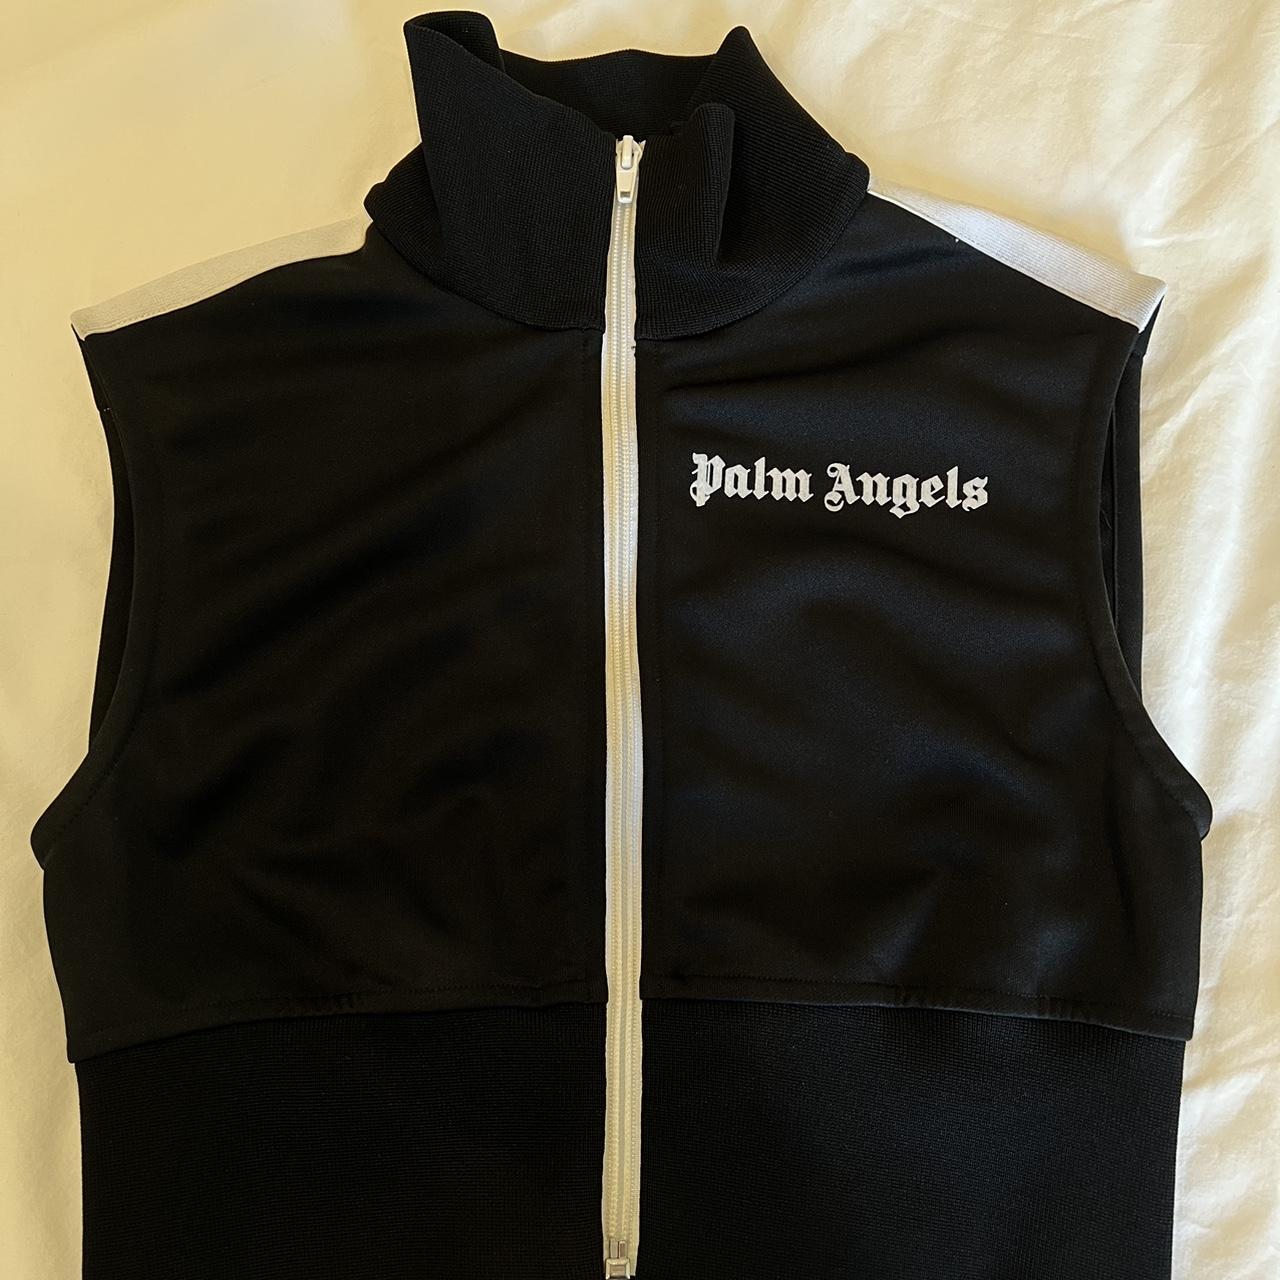 never worn, Palm Angels black logo leggings. tags & - Depop